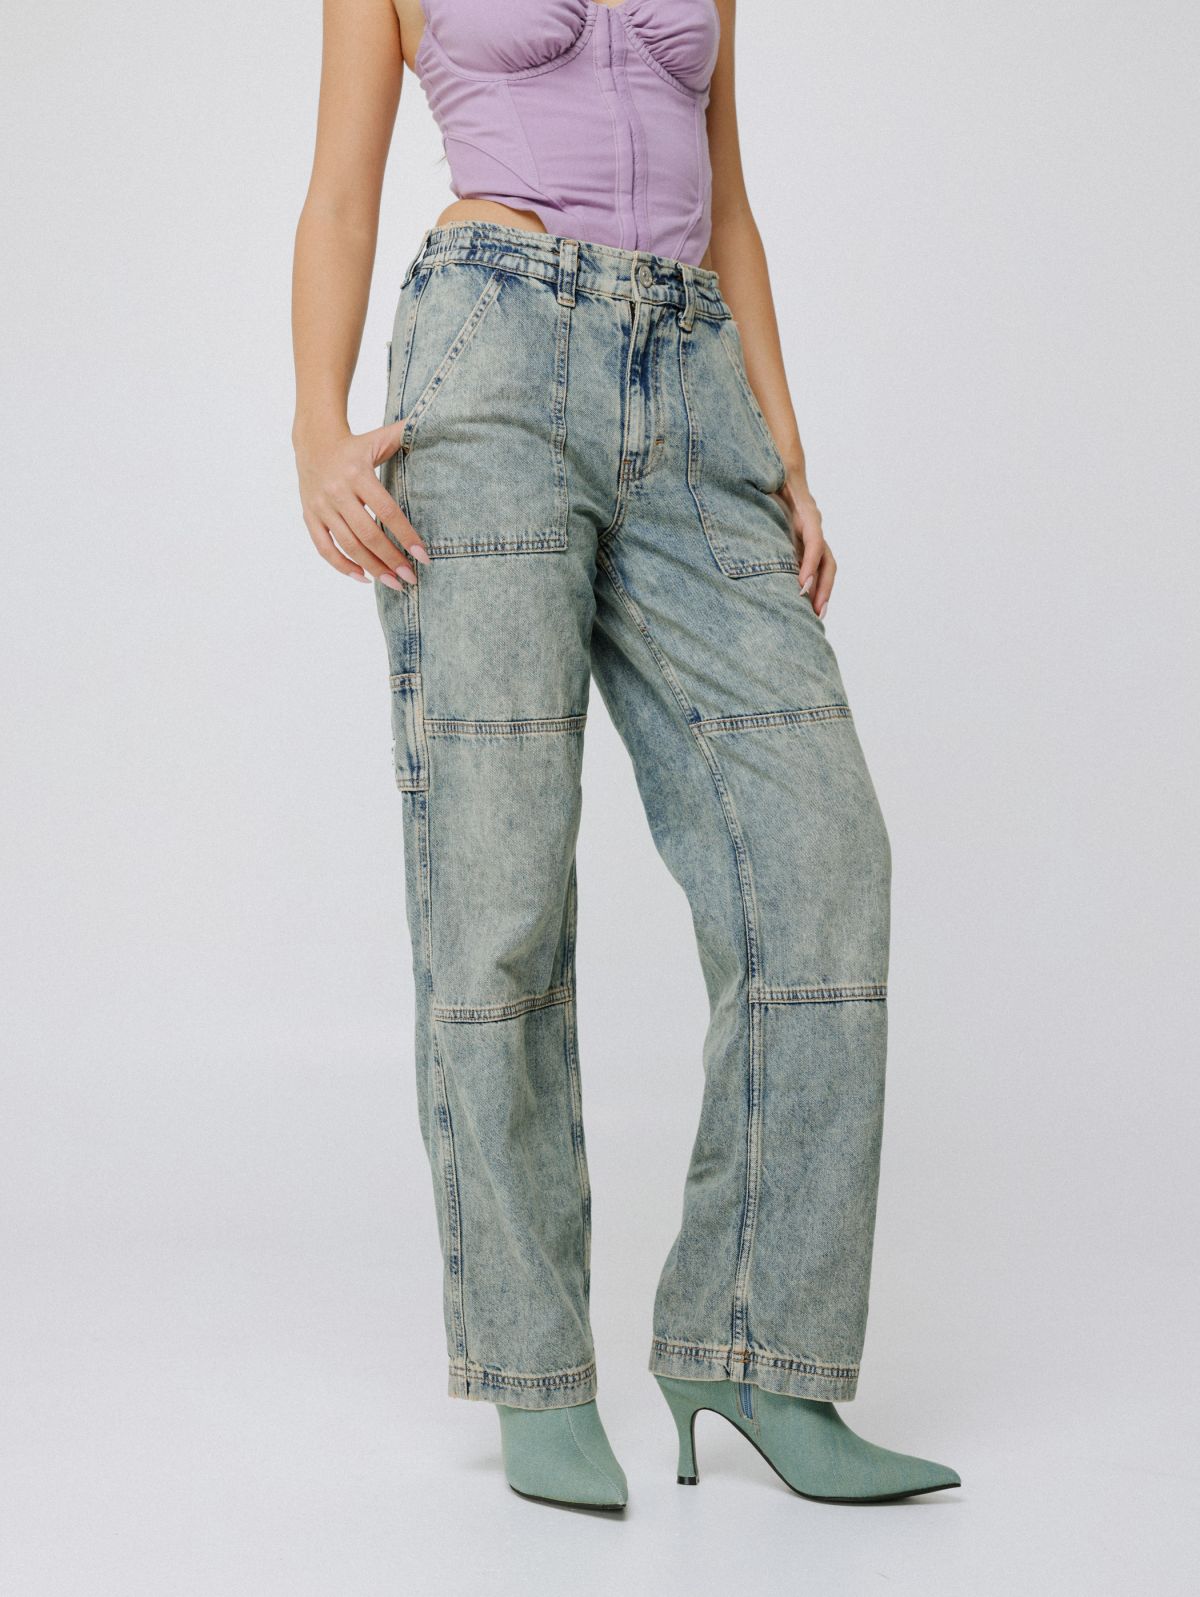  ג'ינס ווש קרגו של URBAN OUTFITTERS